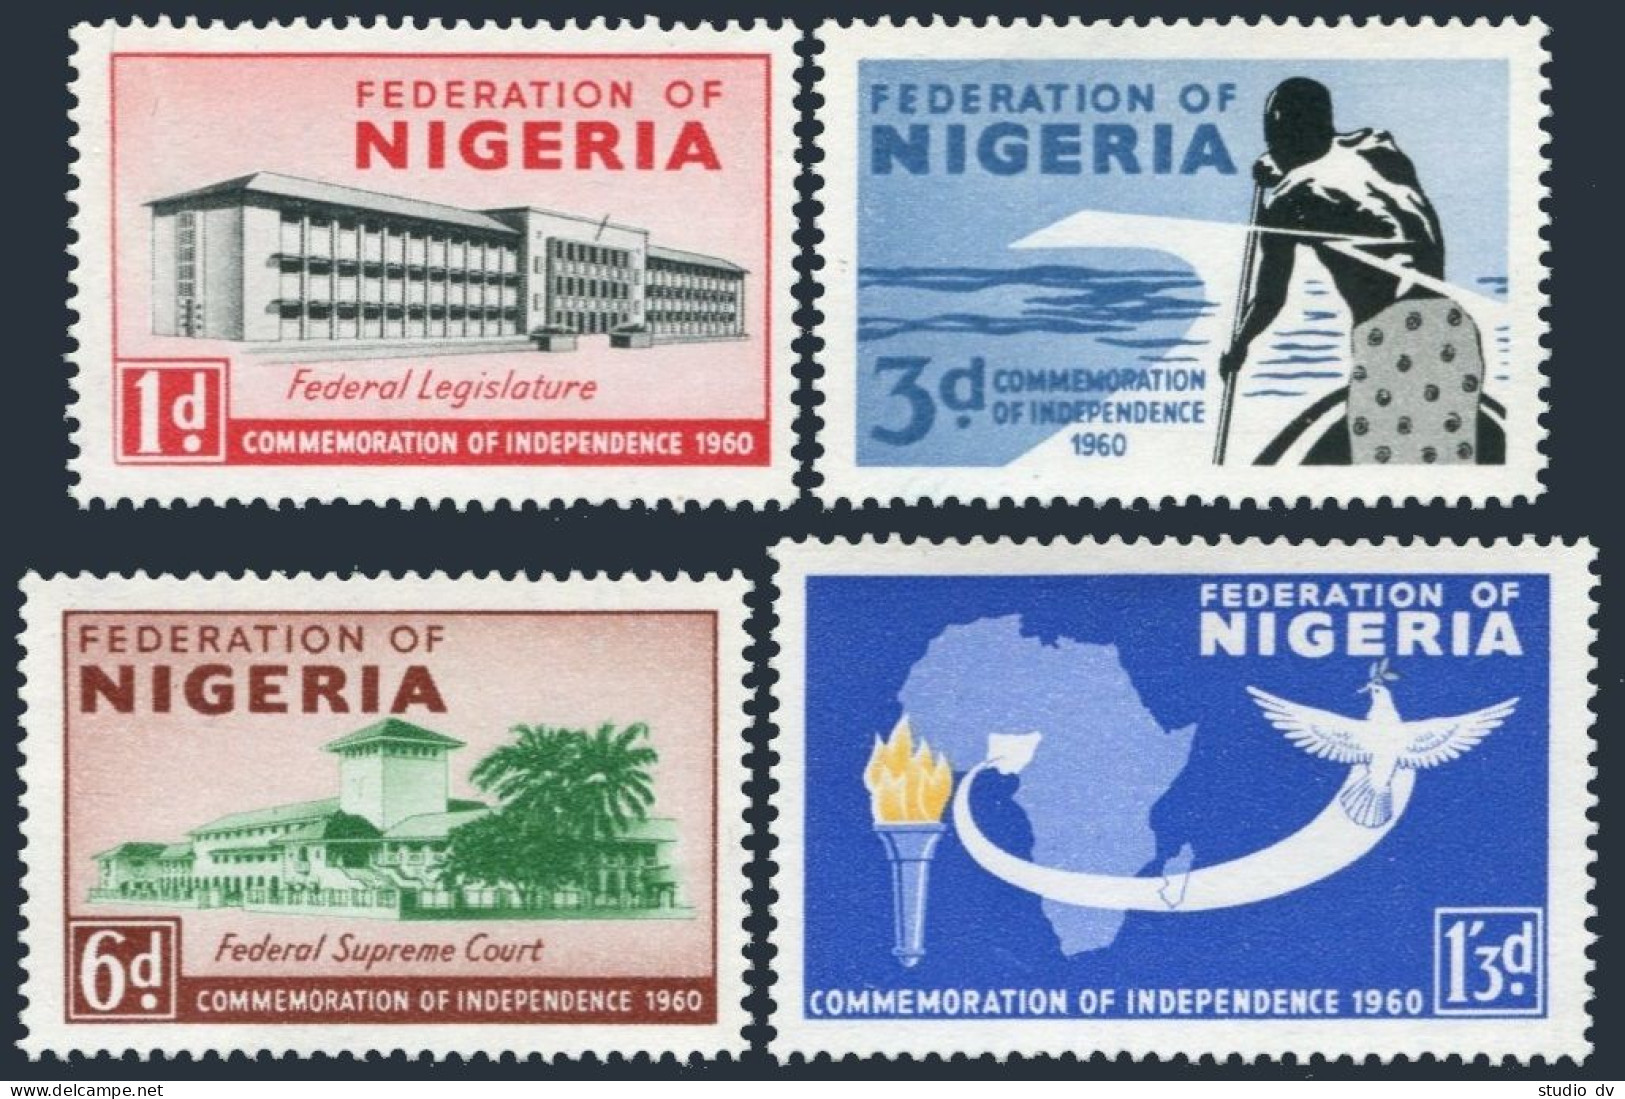 Nigeria 97-100, MNH. Michel 88-91. Commemoration Of Independence,1960. Bird,map. - Nigeria (1961-...)